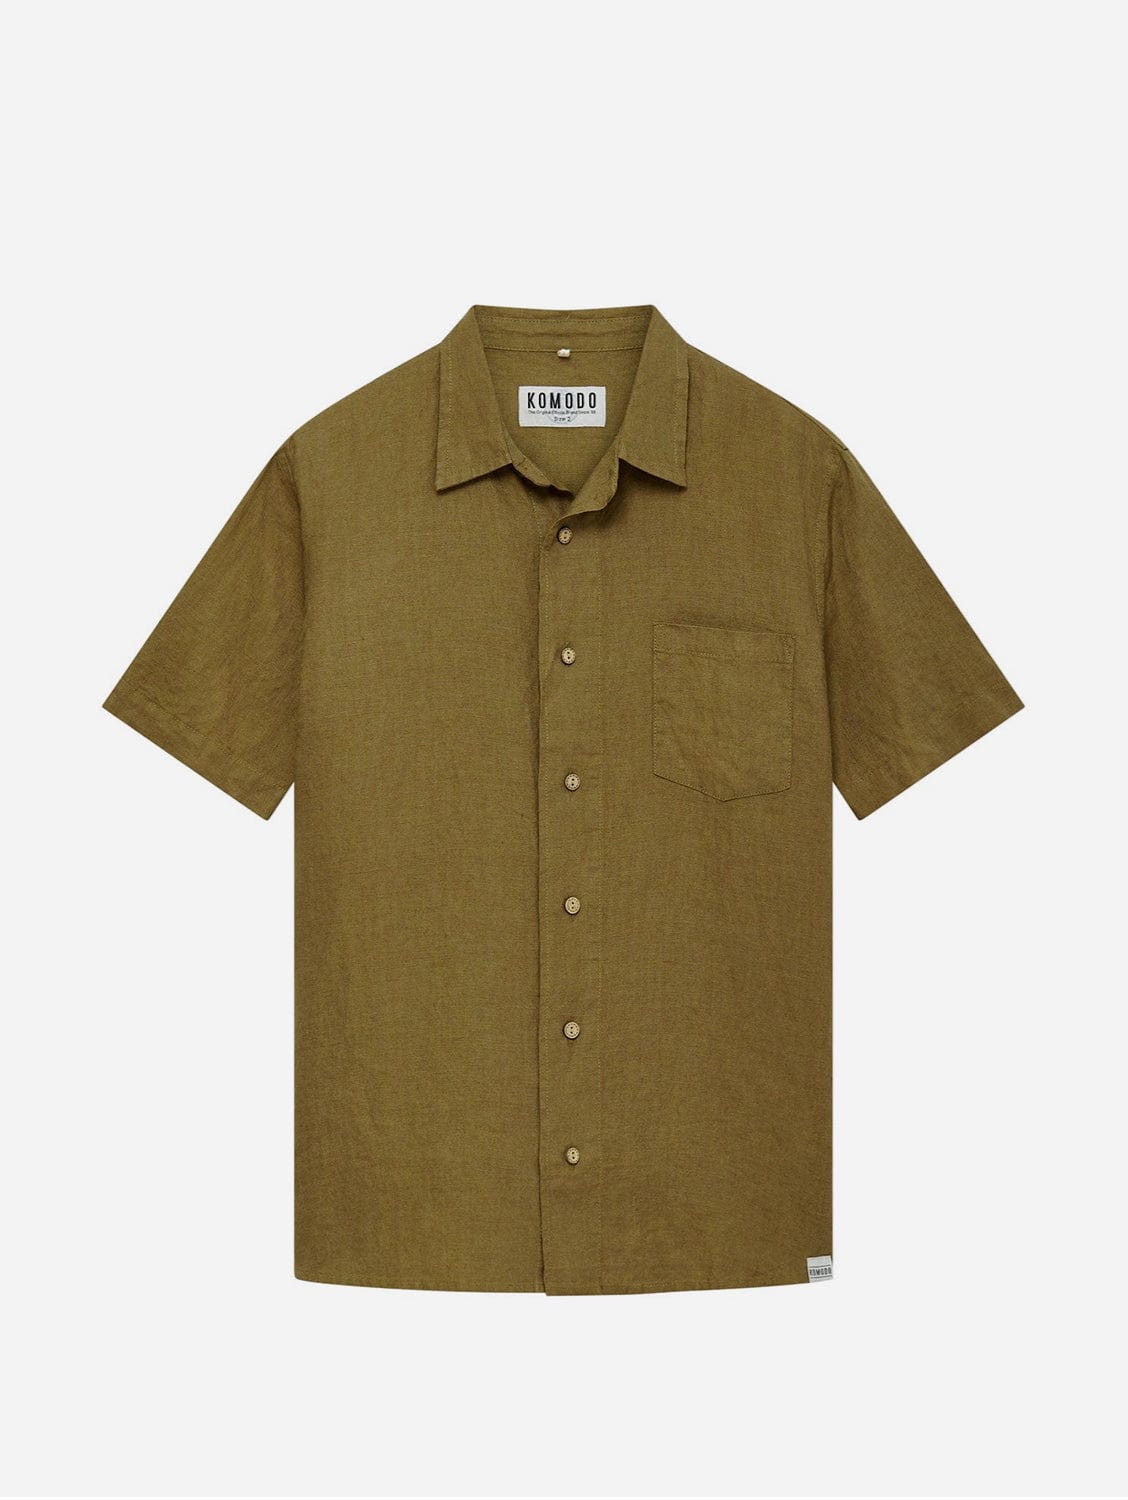 KOMODO DINGWALLS - Linen Shirt Khaki Small